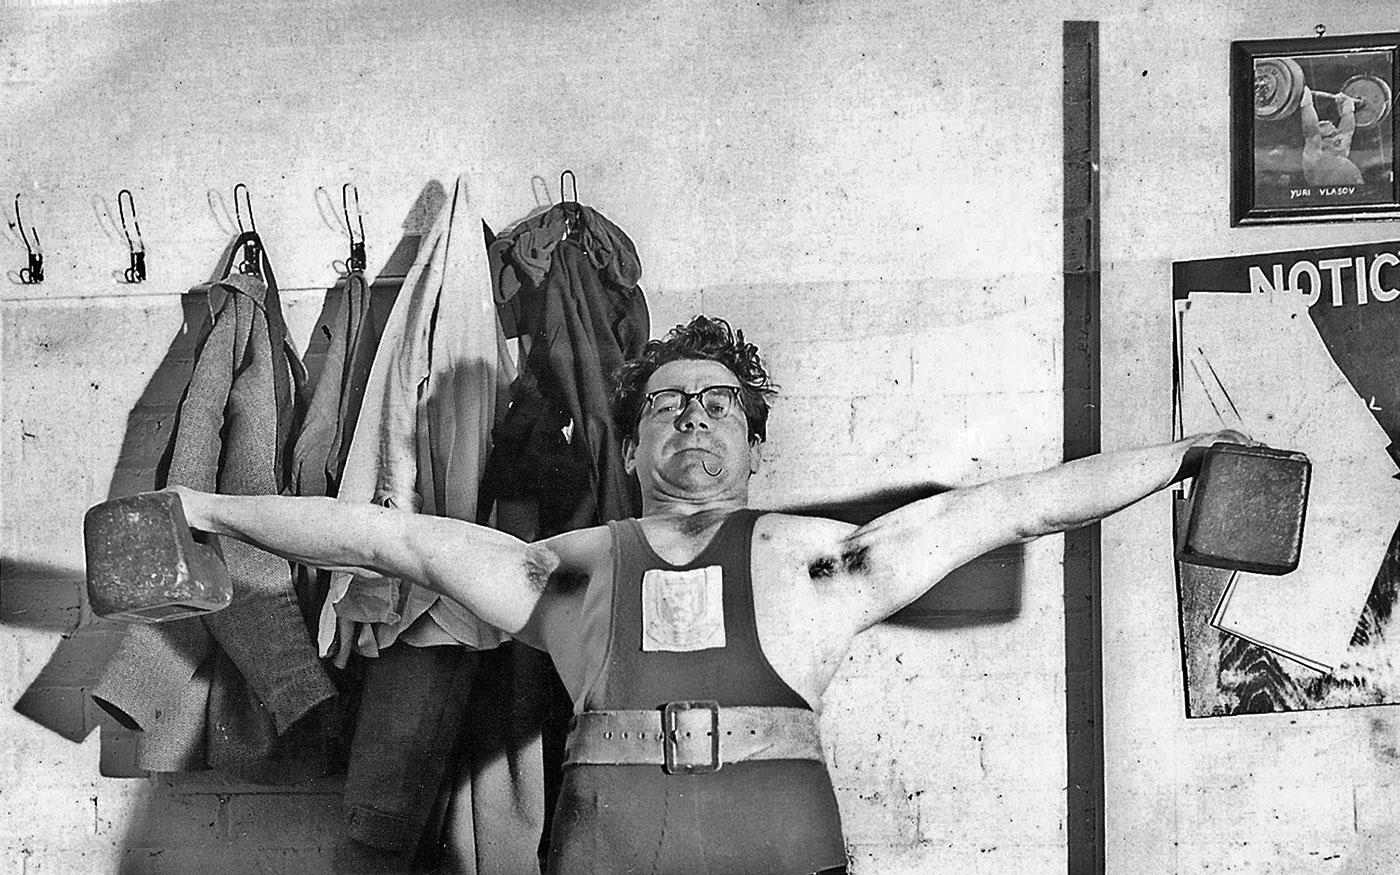 Derek Gillies at Dunedin Club doing the Crucifix with 56lb weights